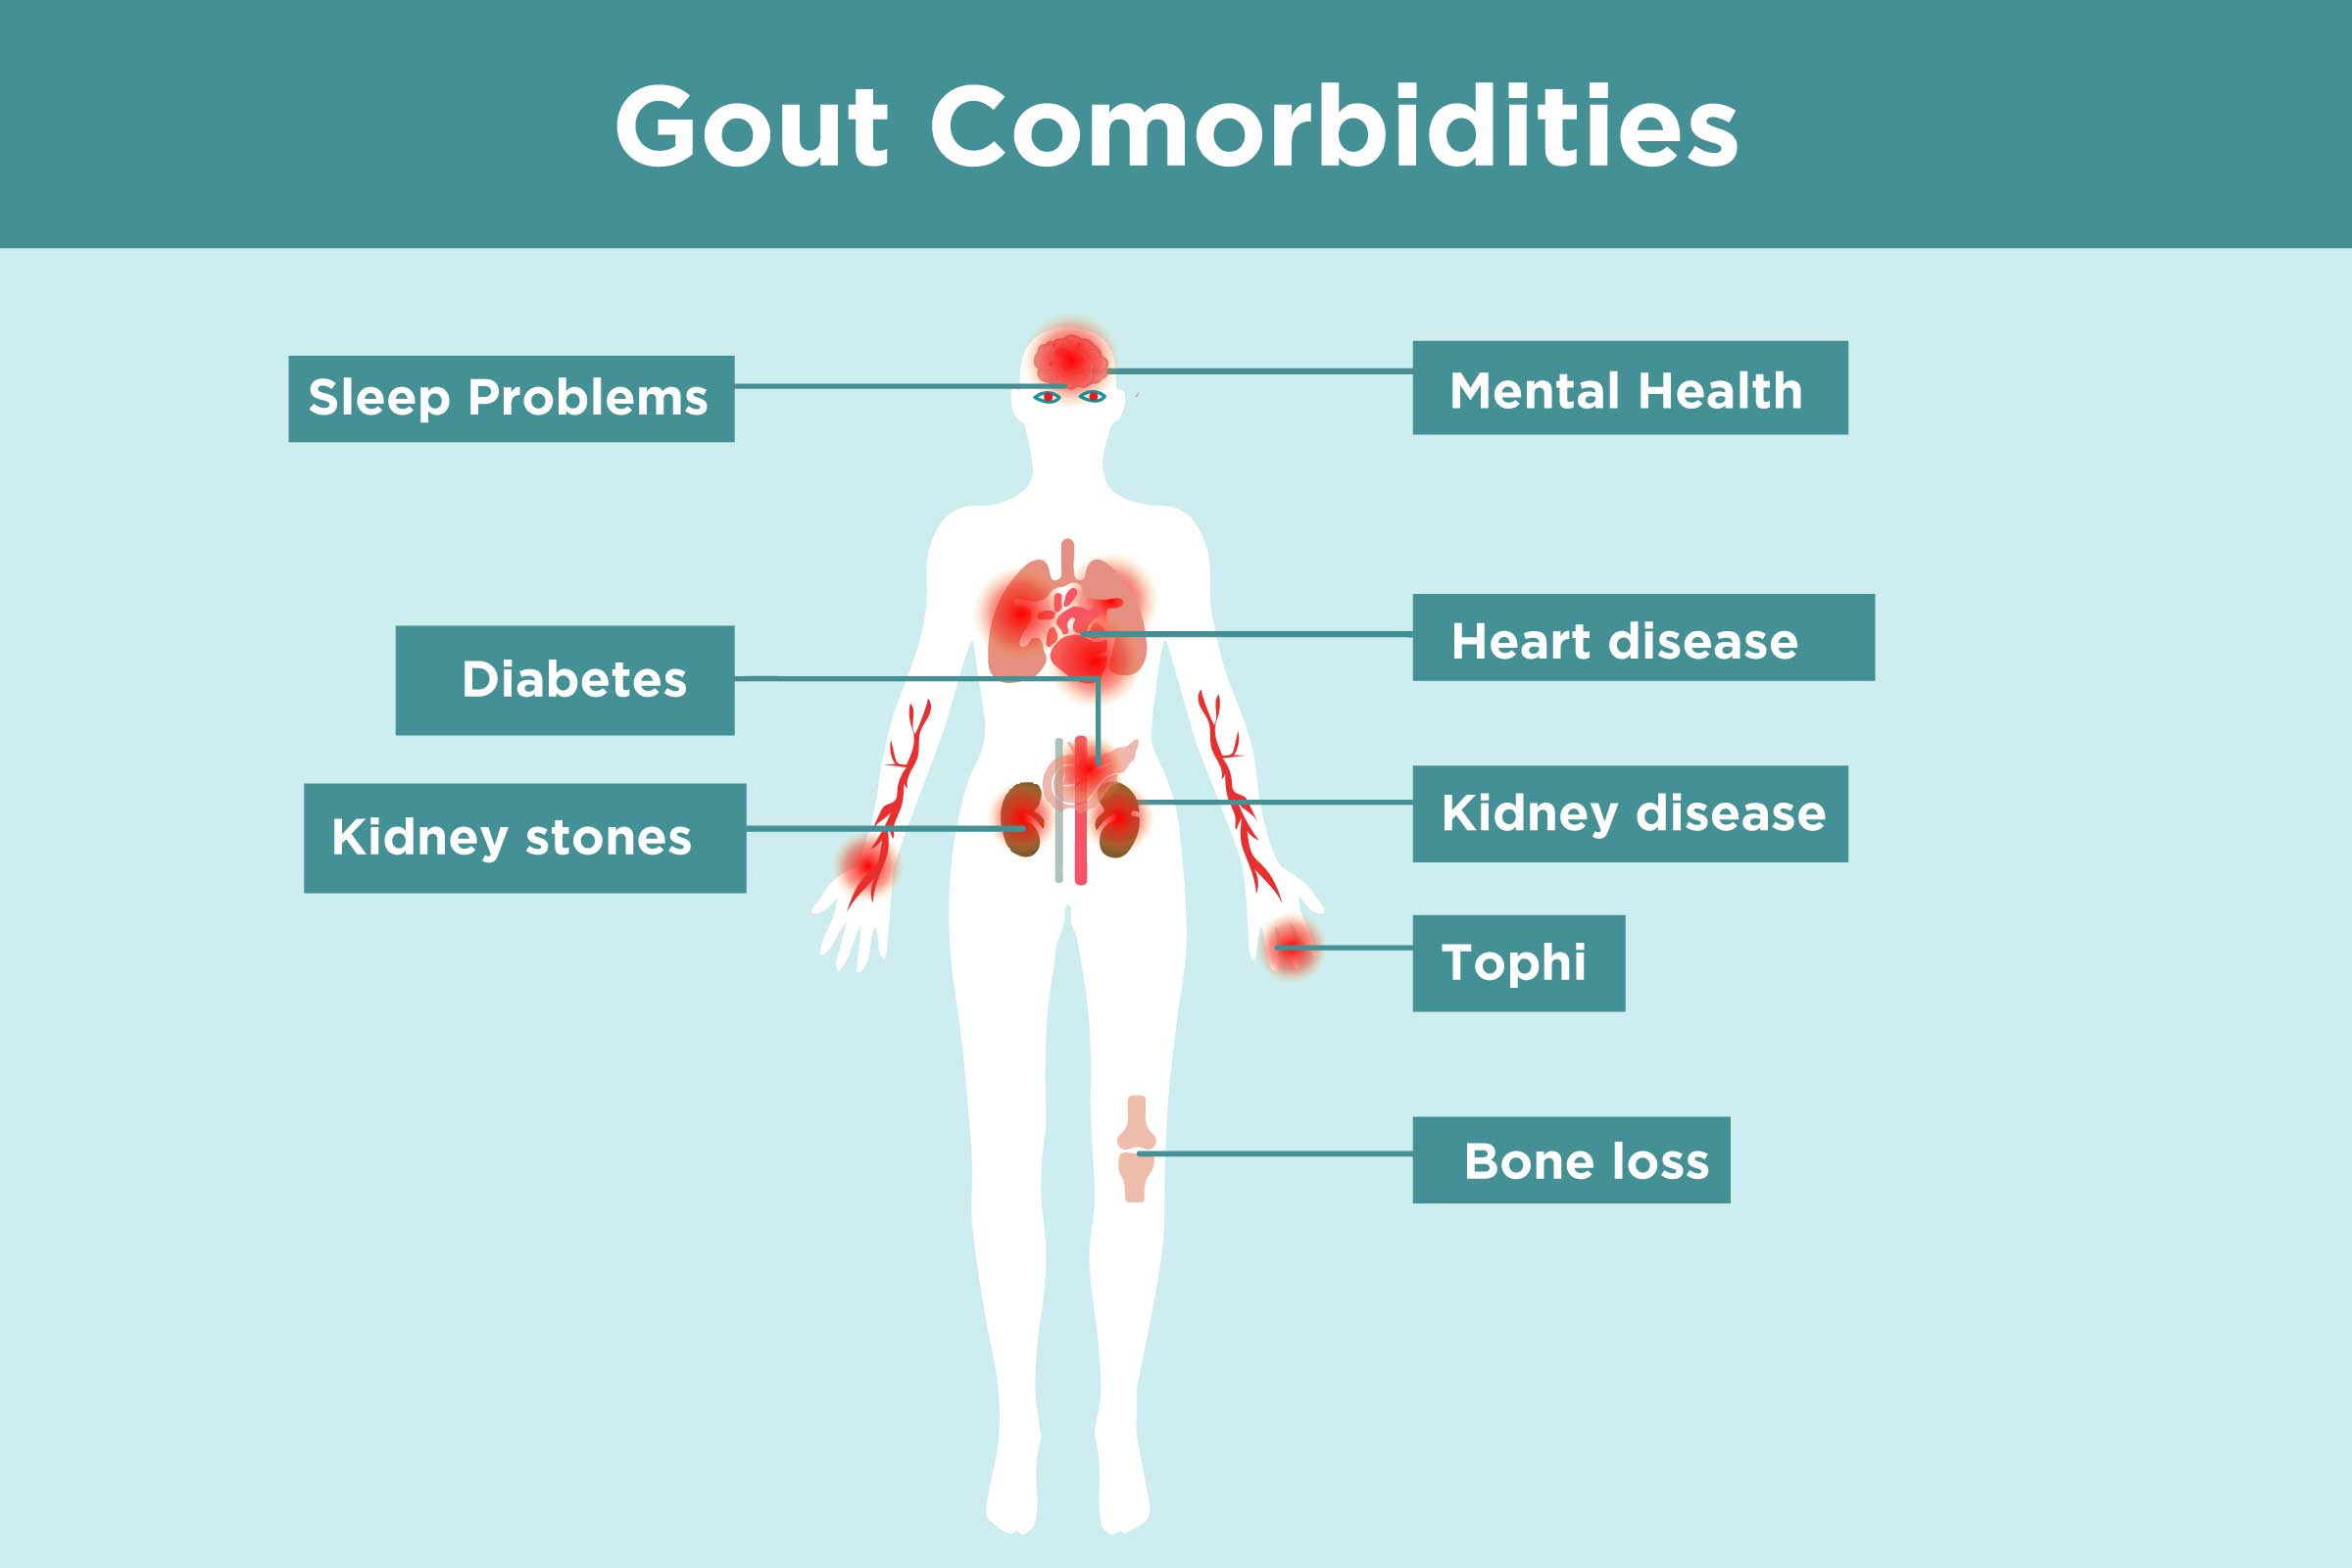 Gout comorbidities